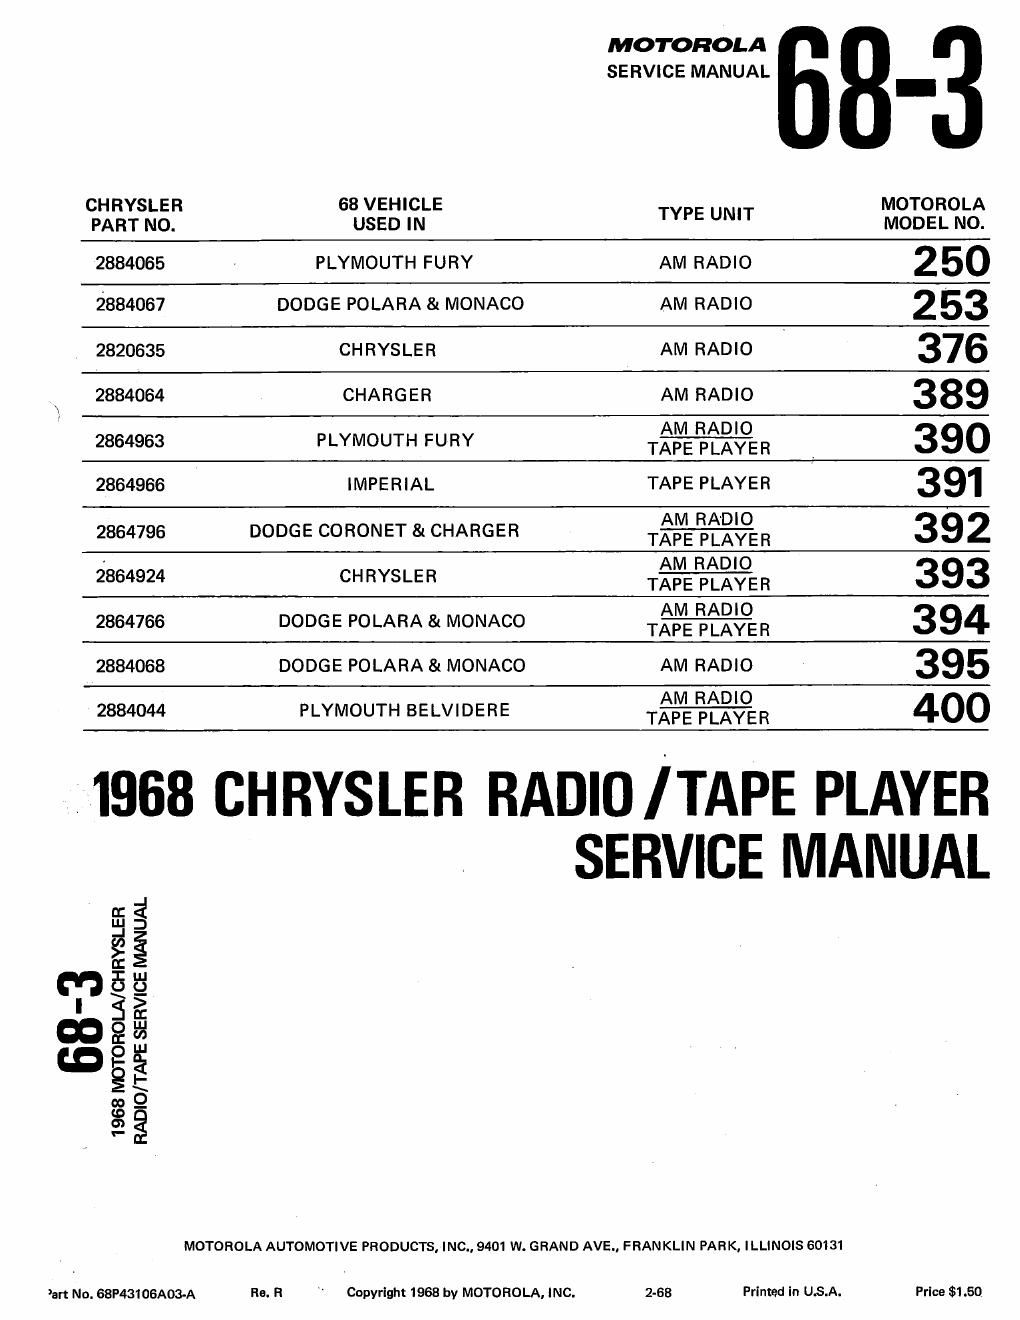 motorola 395 service manual